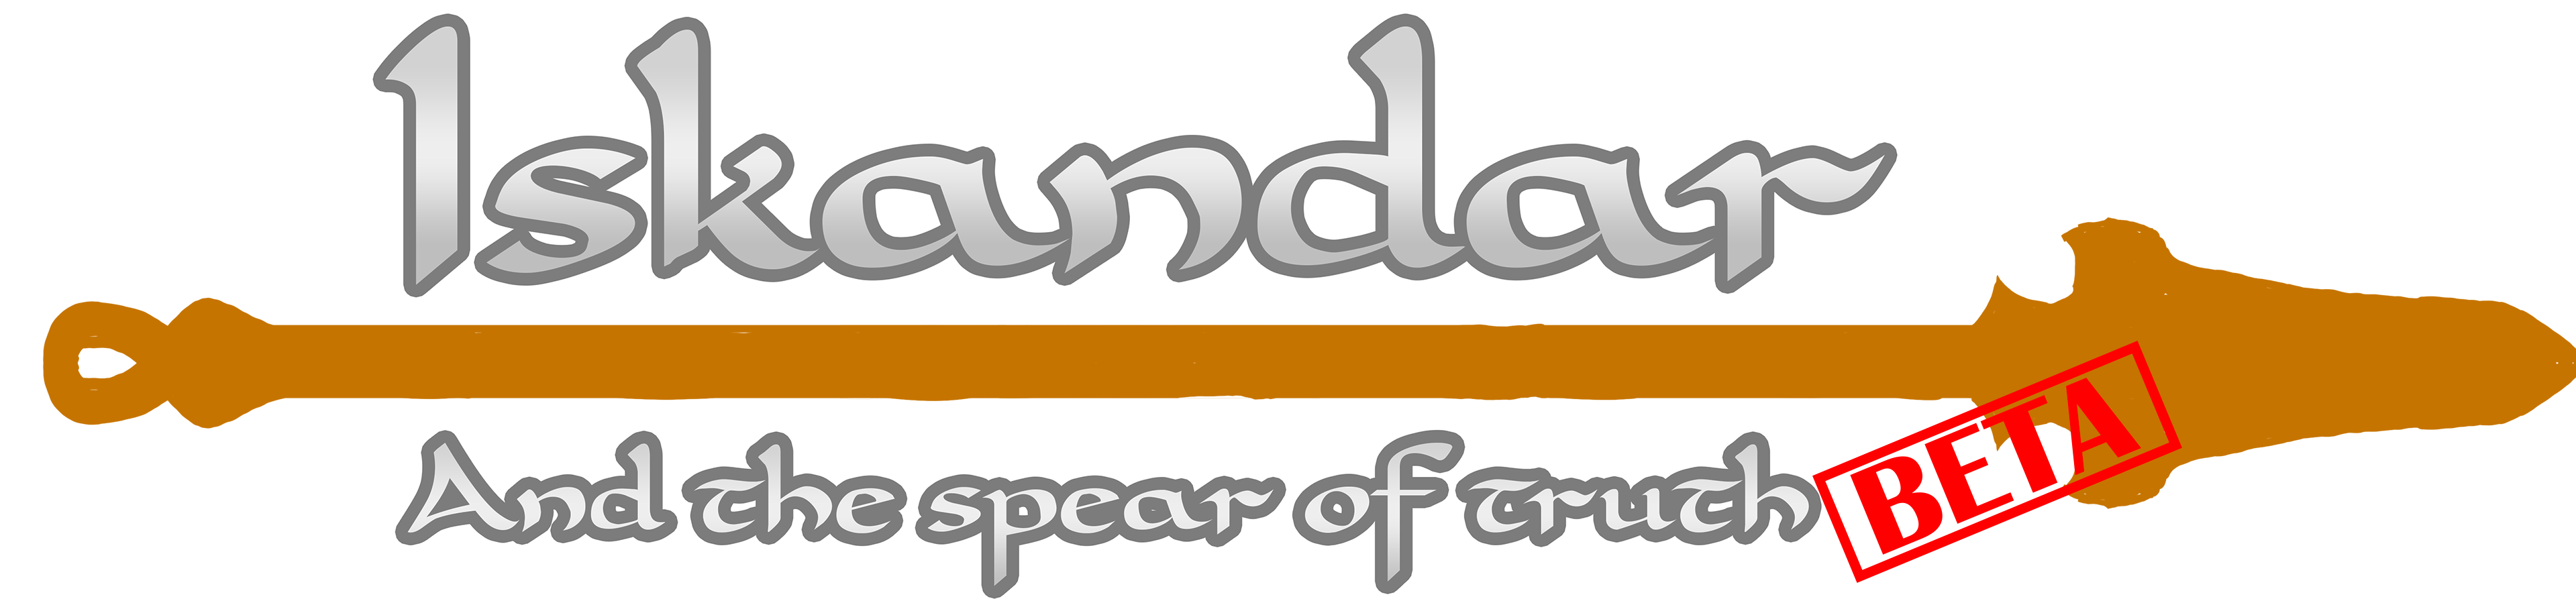 Iskandar: The Spear of Truth - Beta